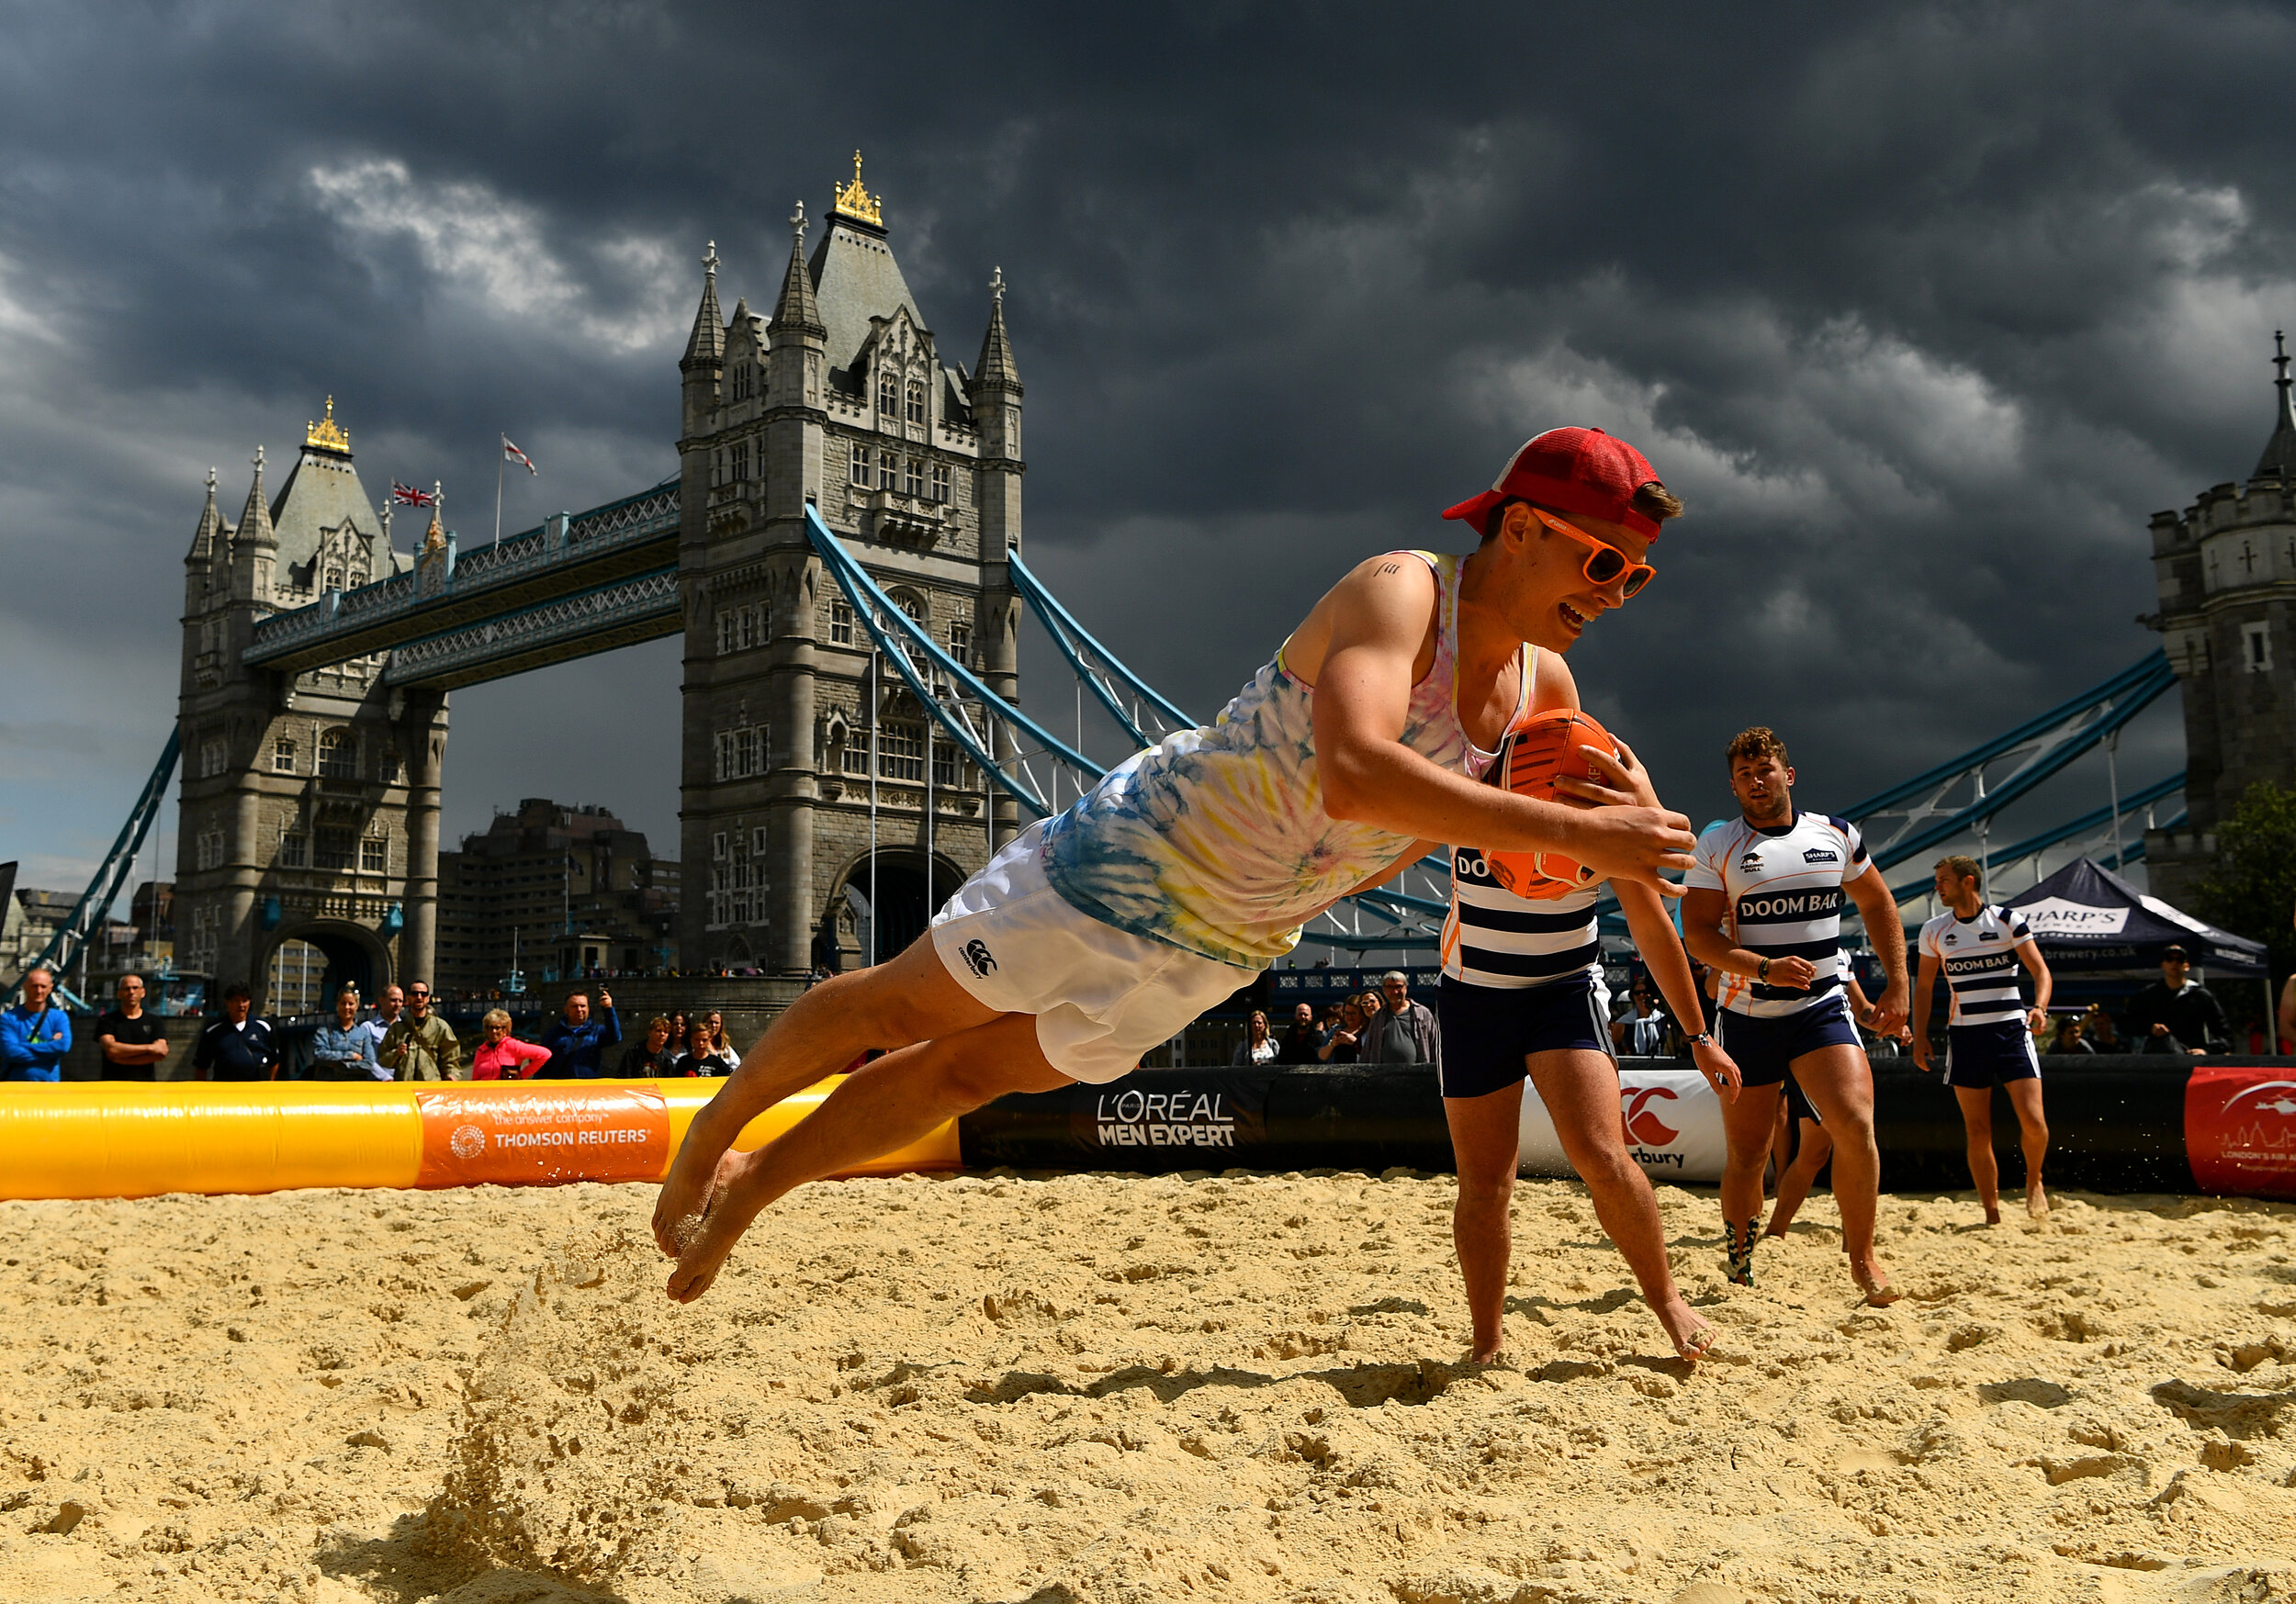  Tower Bridge - London Beach Rugby 